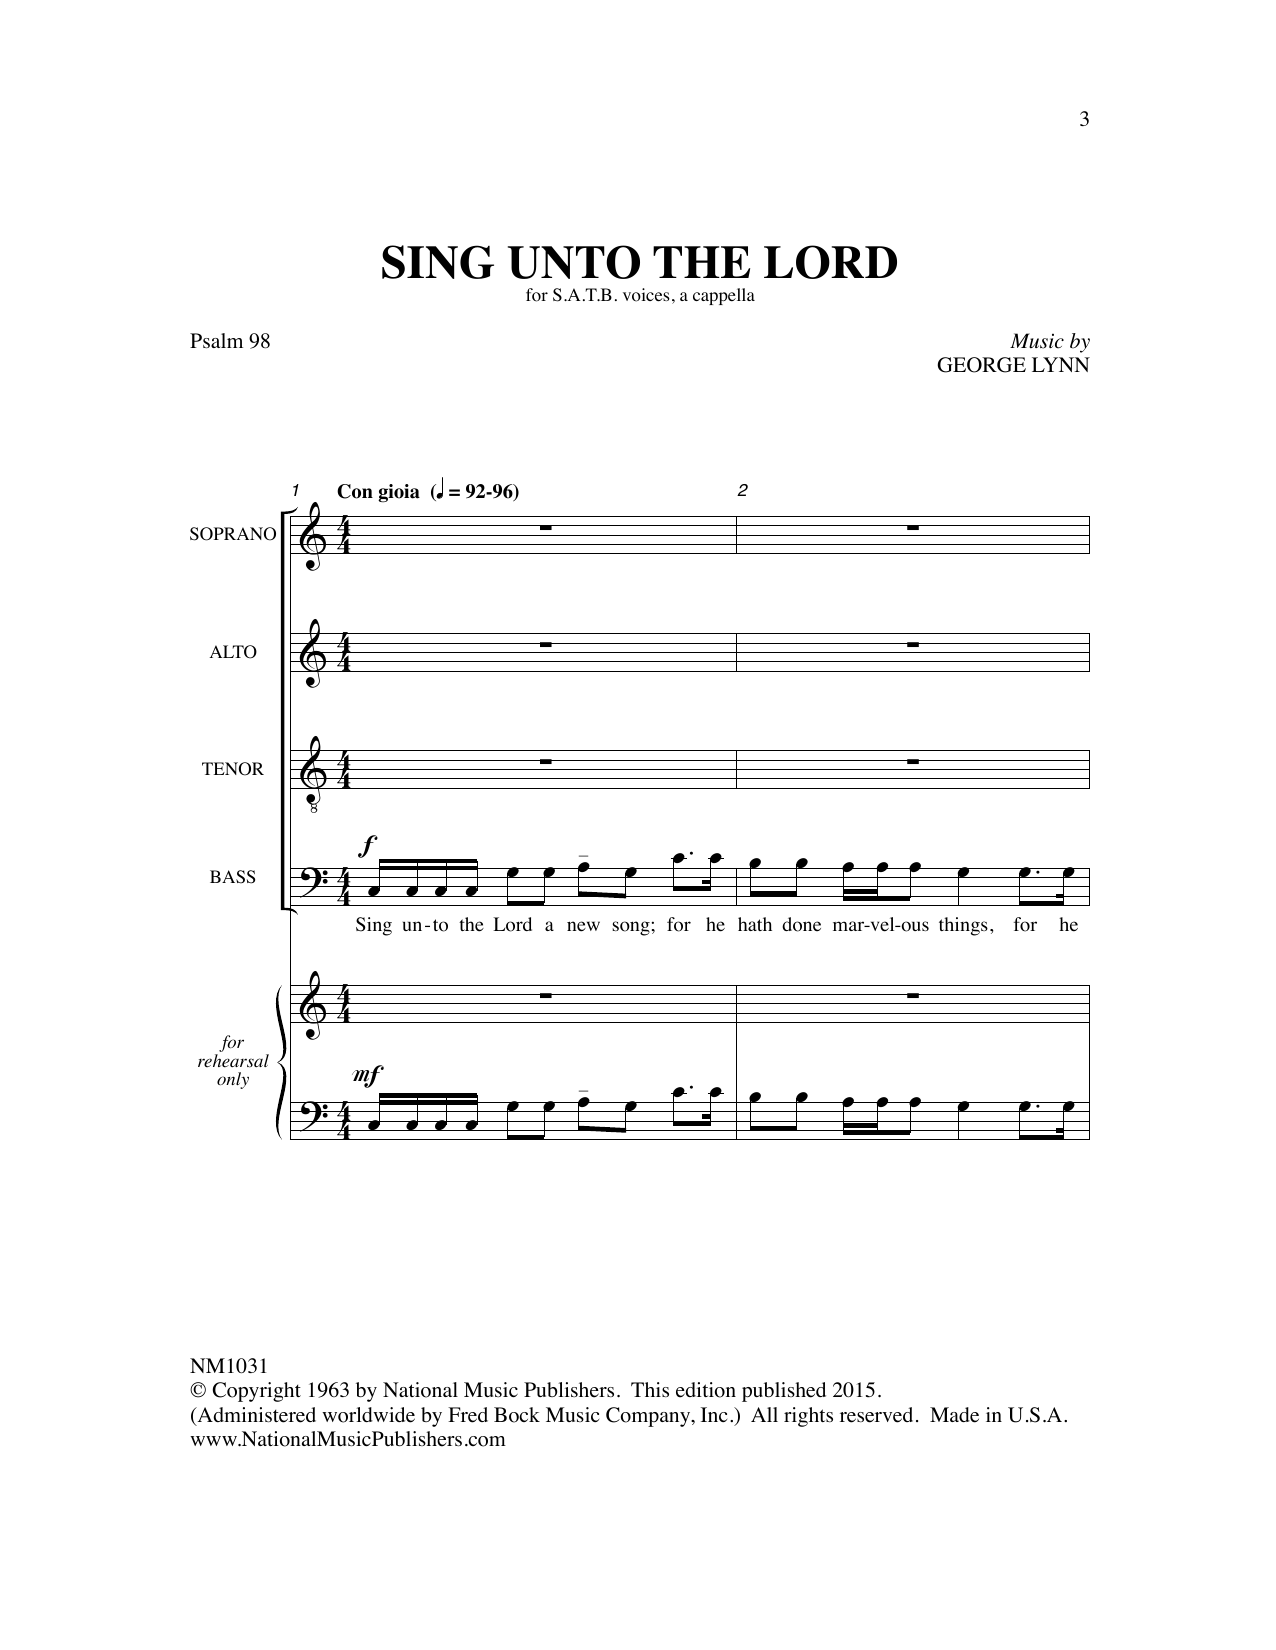 George Lynn Sing Unto The Lord Sheet Music Notes & Chords for SATB Choir - Download or Print PDF